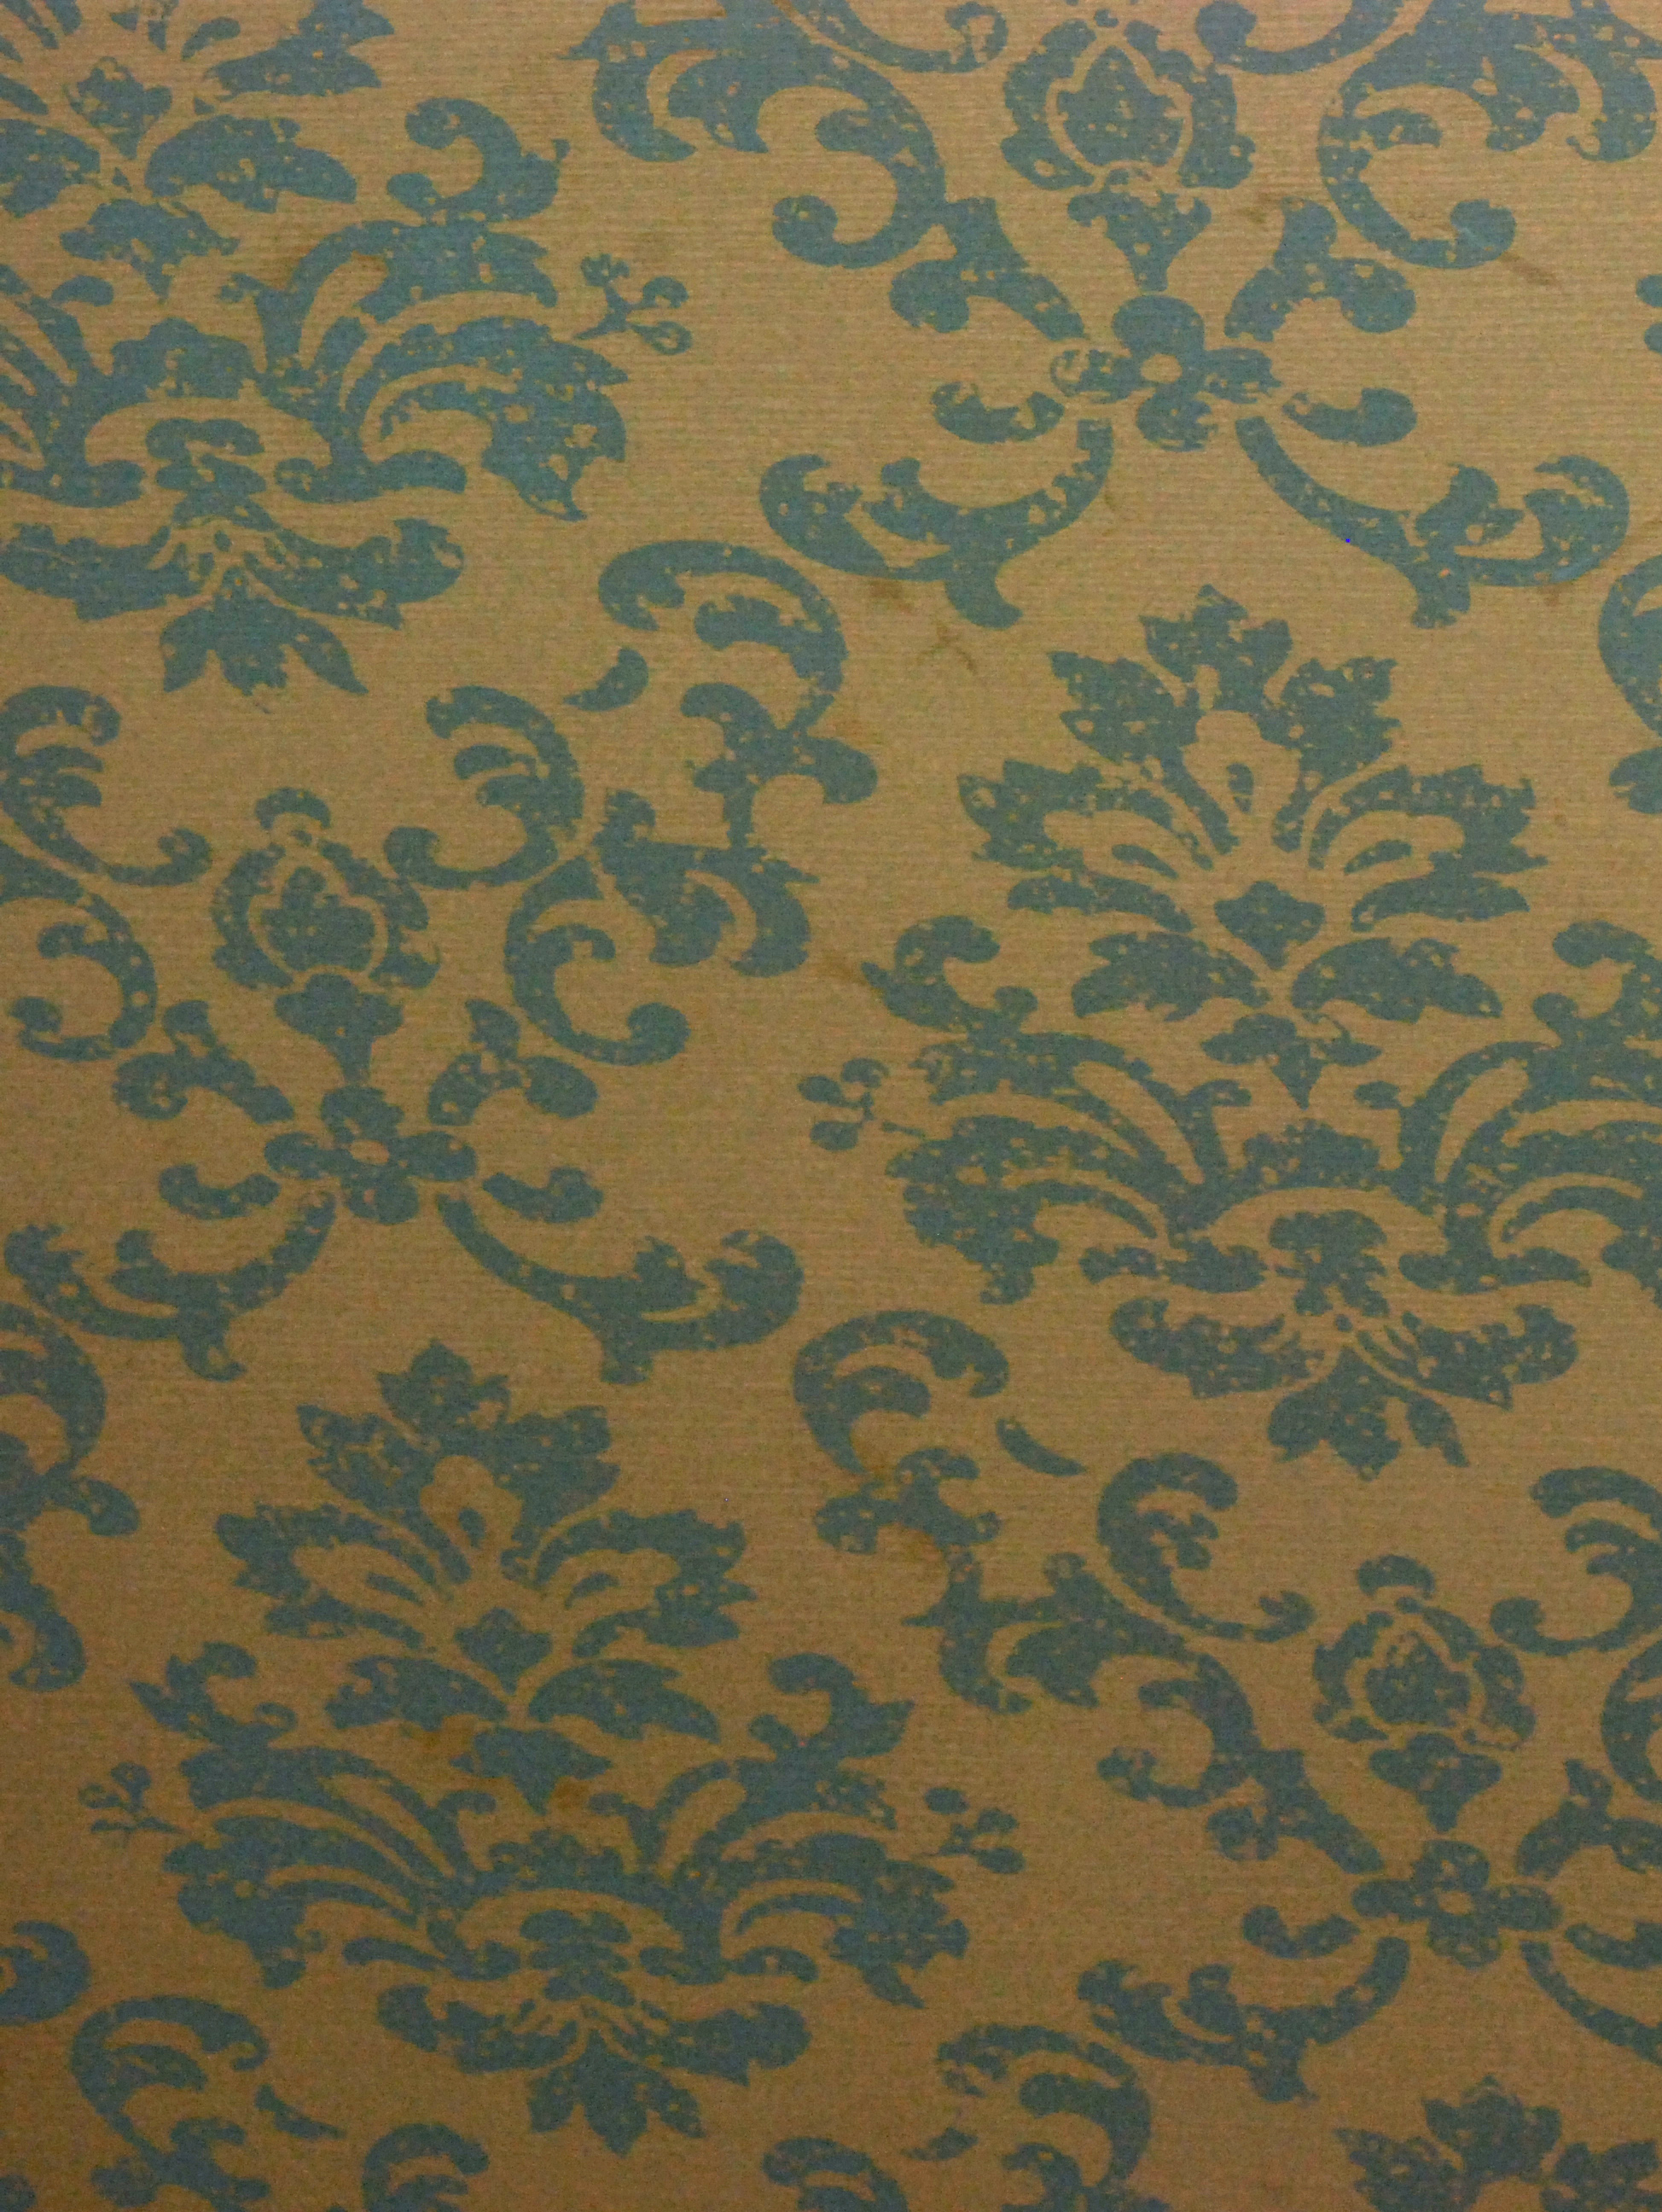 antique wallpaper pattern